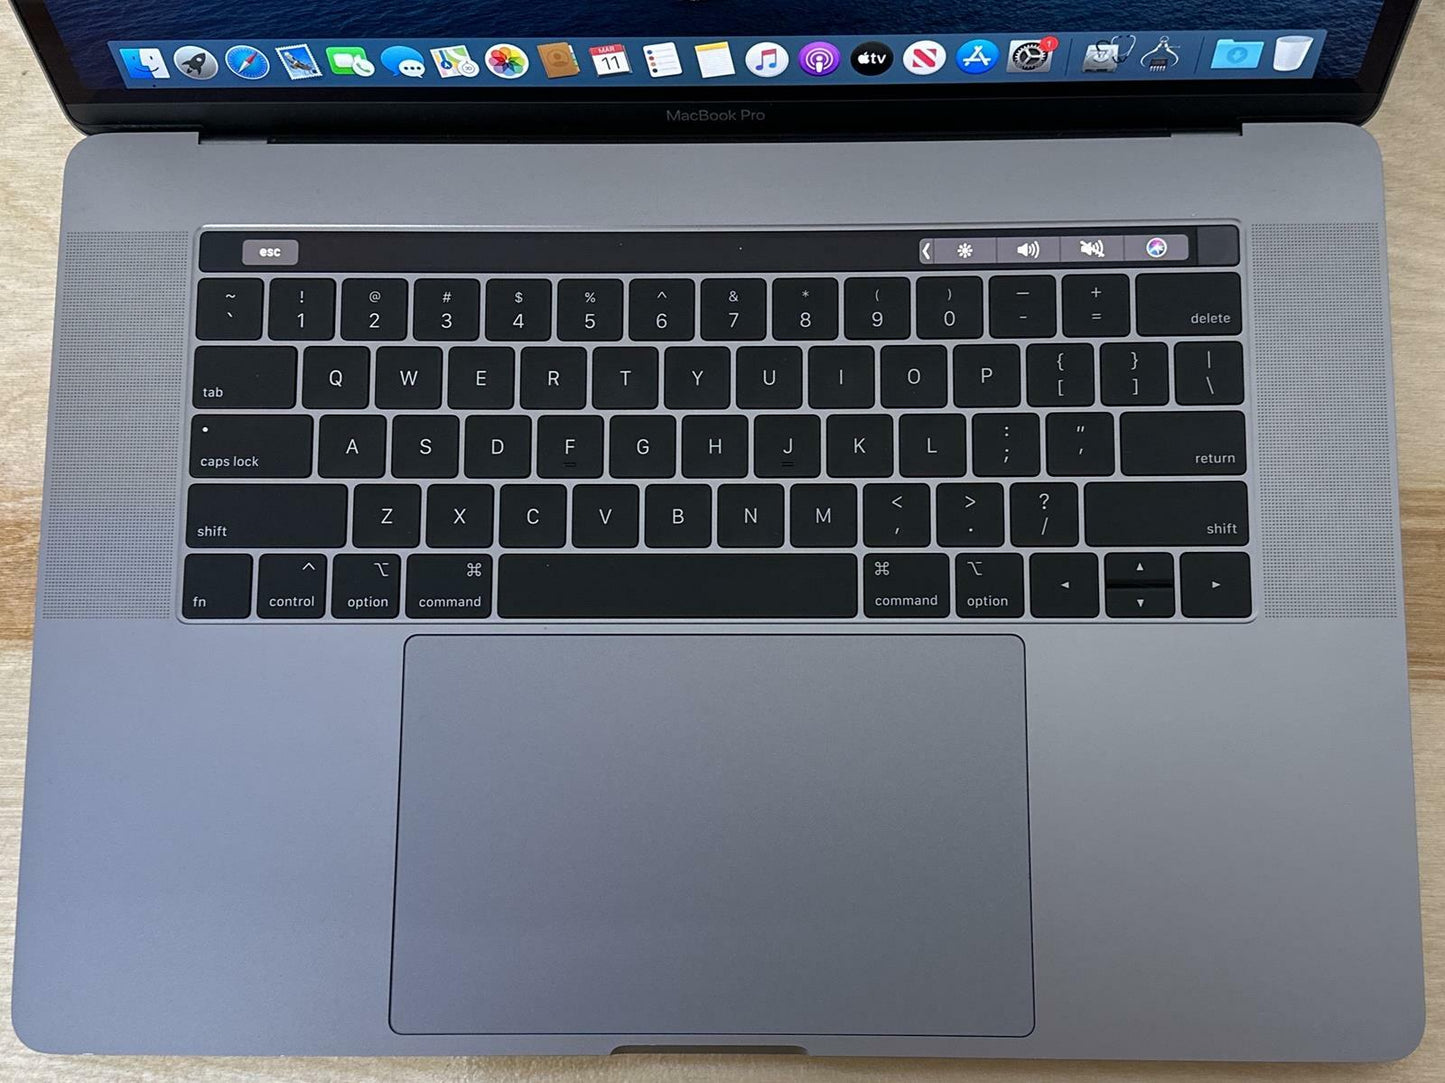 Apple MacBook Pro 15" 2019 (Intel Core i7 2.4Ghz, 16GB, 512GB, Radeon 560X) Gray